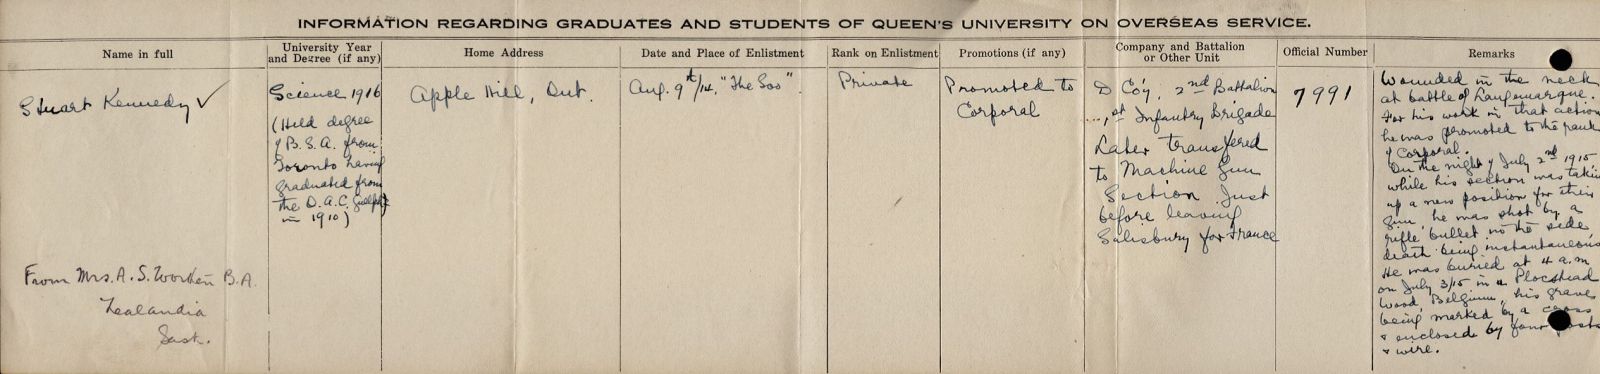 University Overseas Service Record of Kennedy